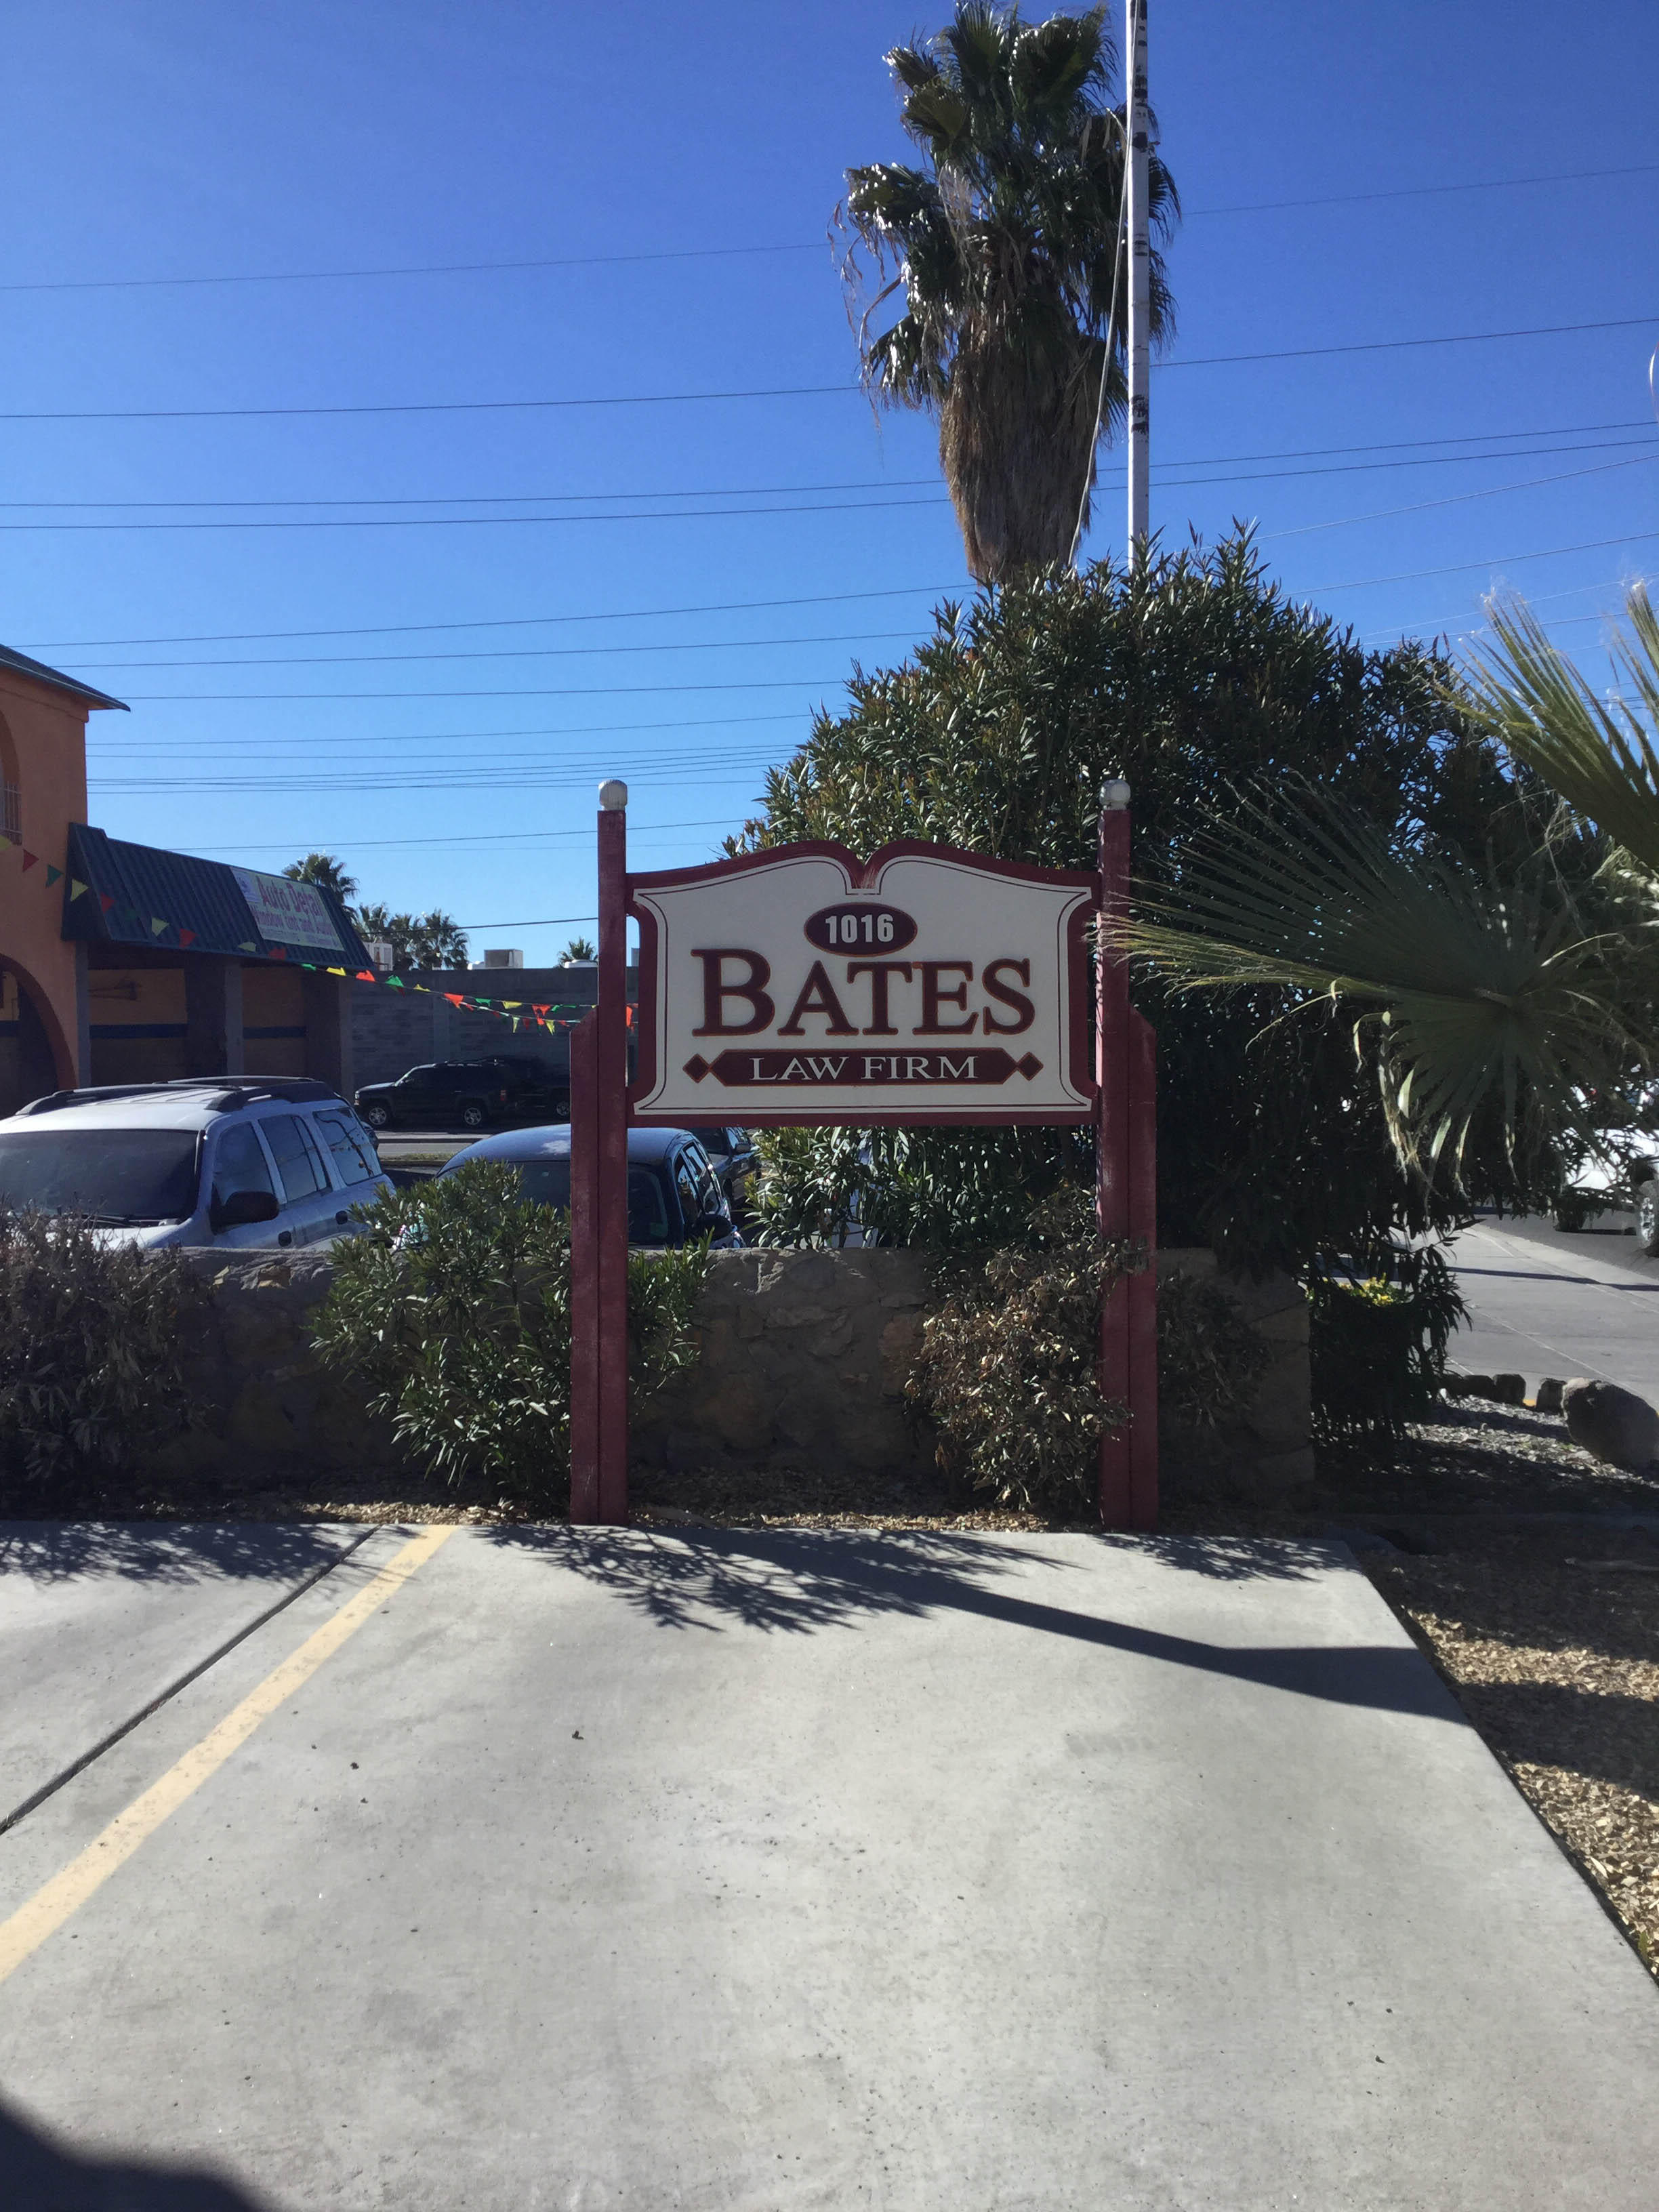 Bates Law Firm - Las Cruces, NM 88001 - (575)524-8585 | ShowMeLocal.com